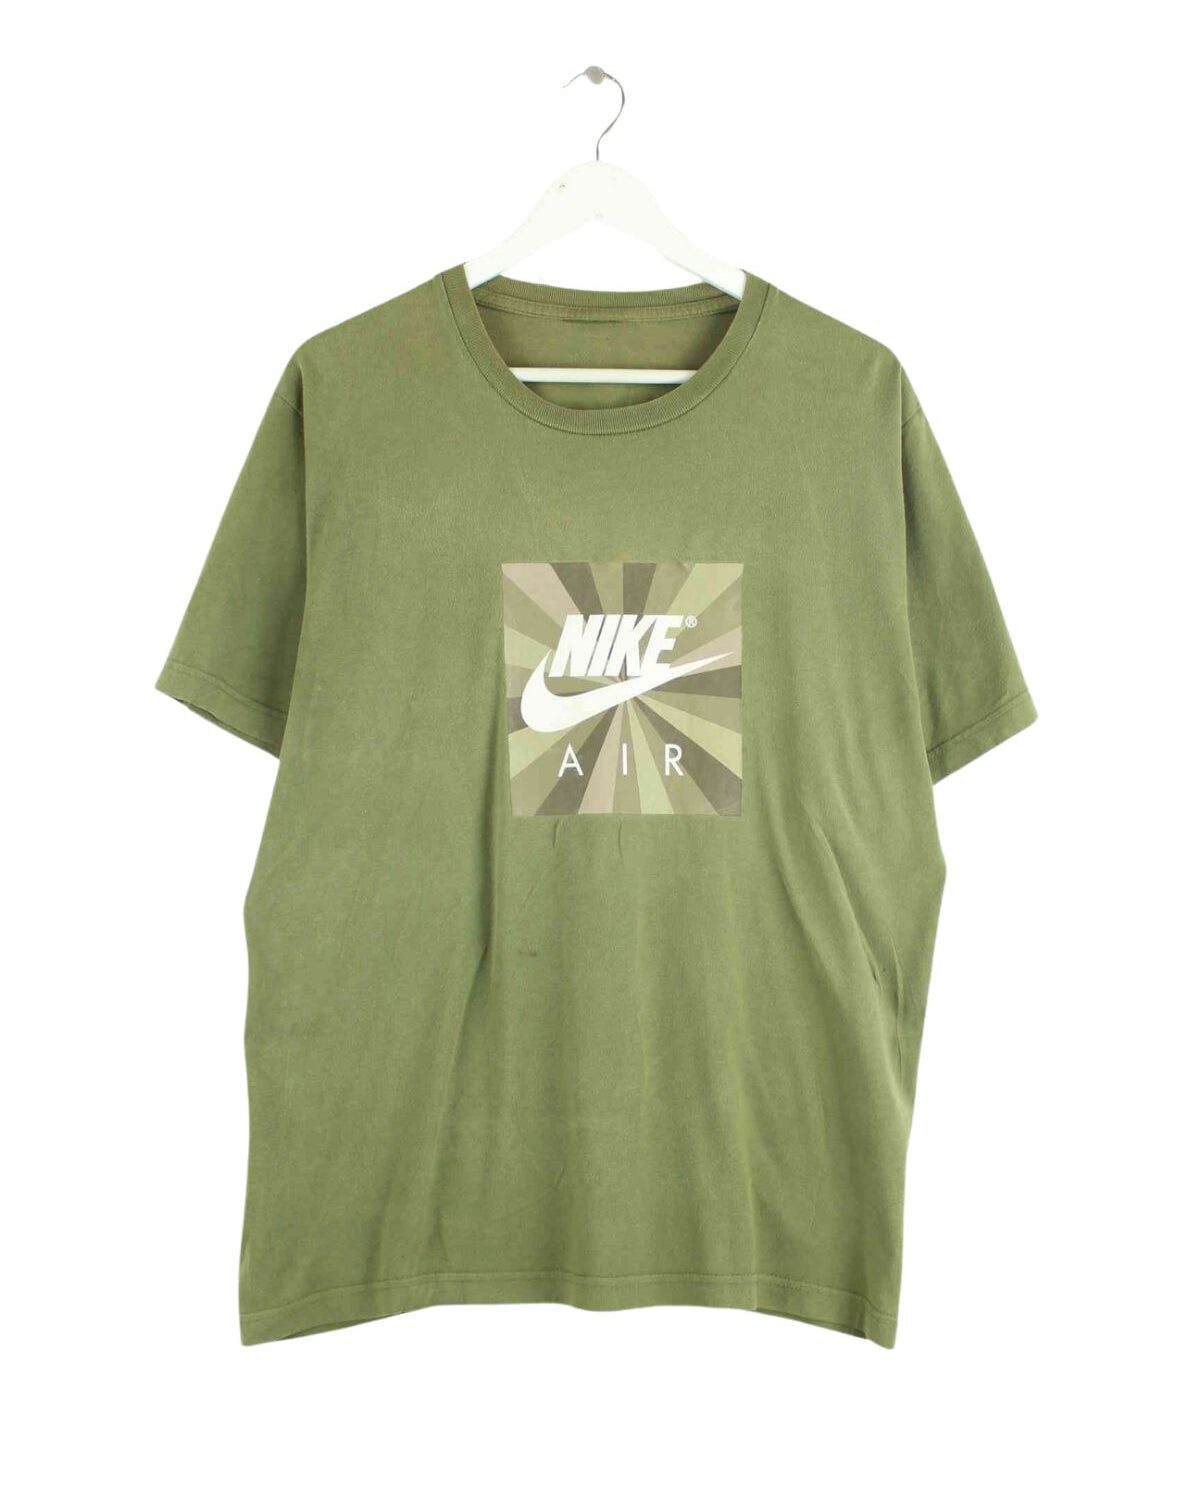 Nike Air Print T-Shirt Khaki M (front image)